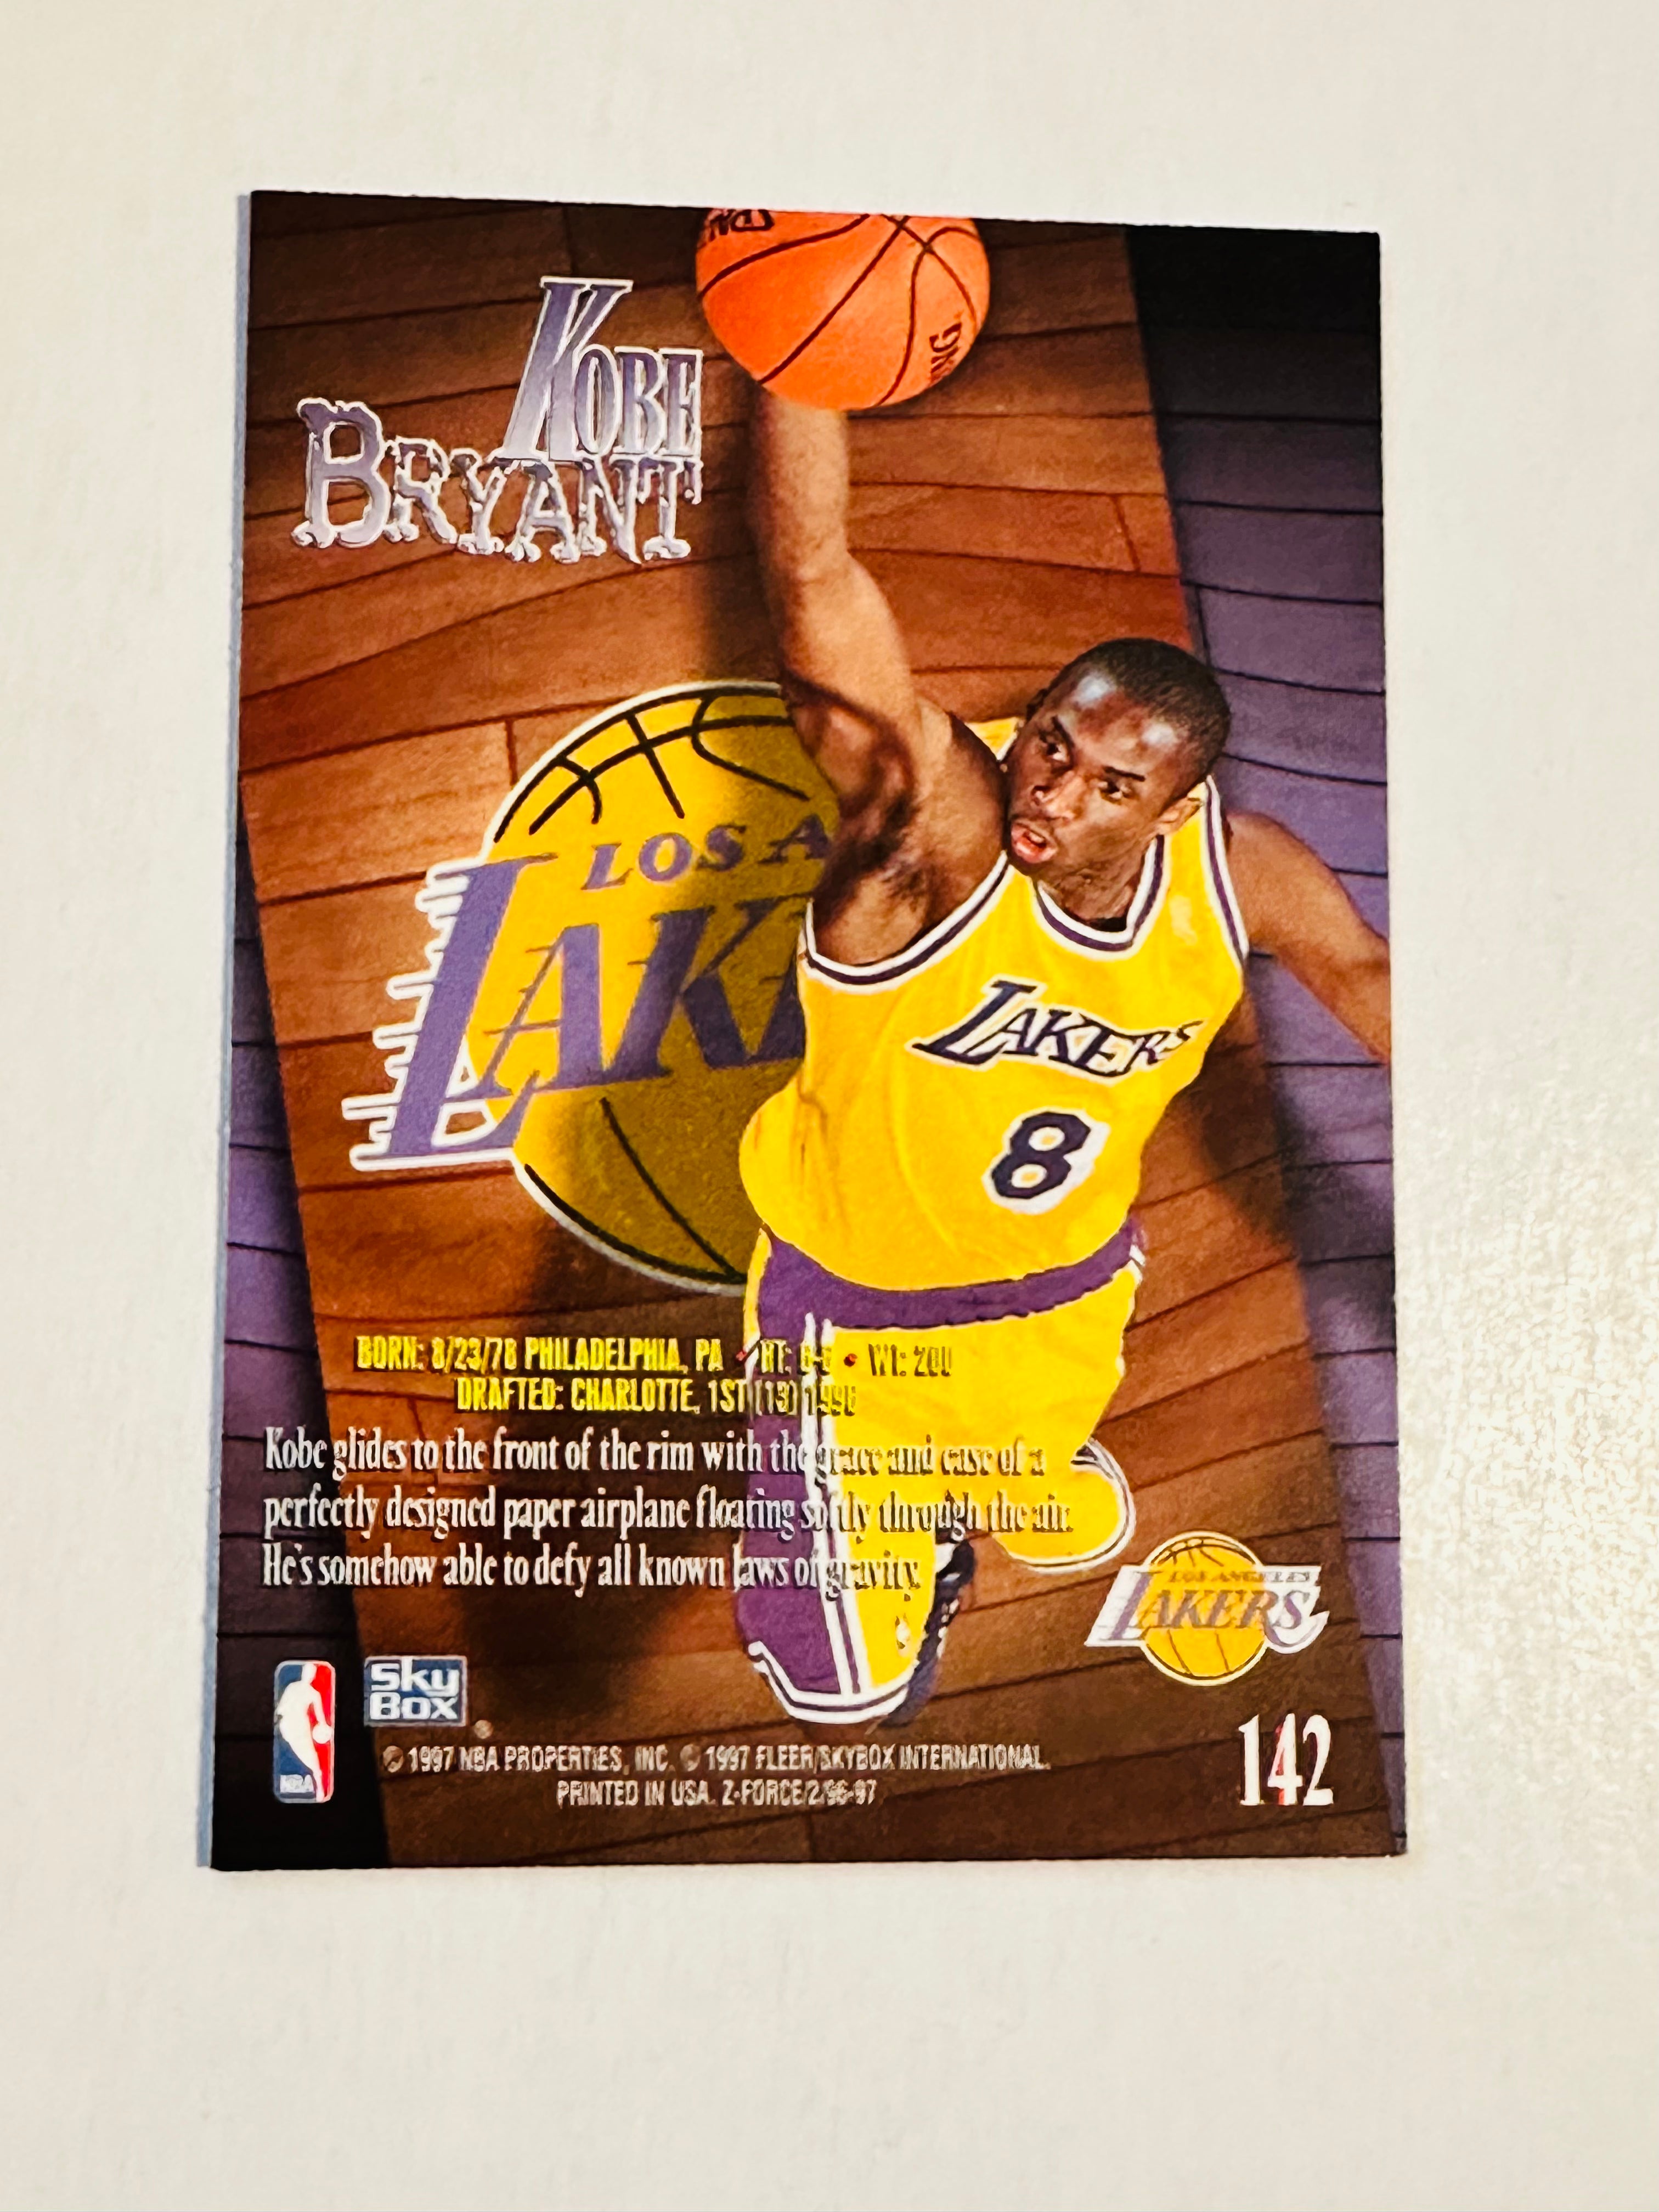 Kobe Bryant NBA legend Z force basketball high-grade rookie card